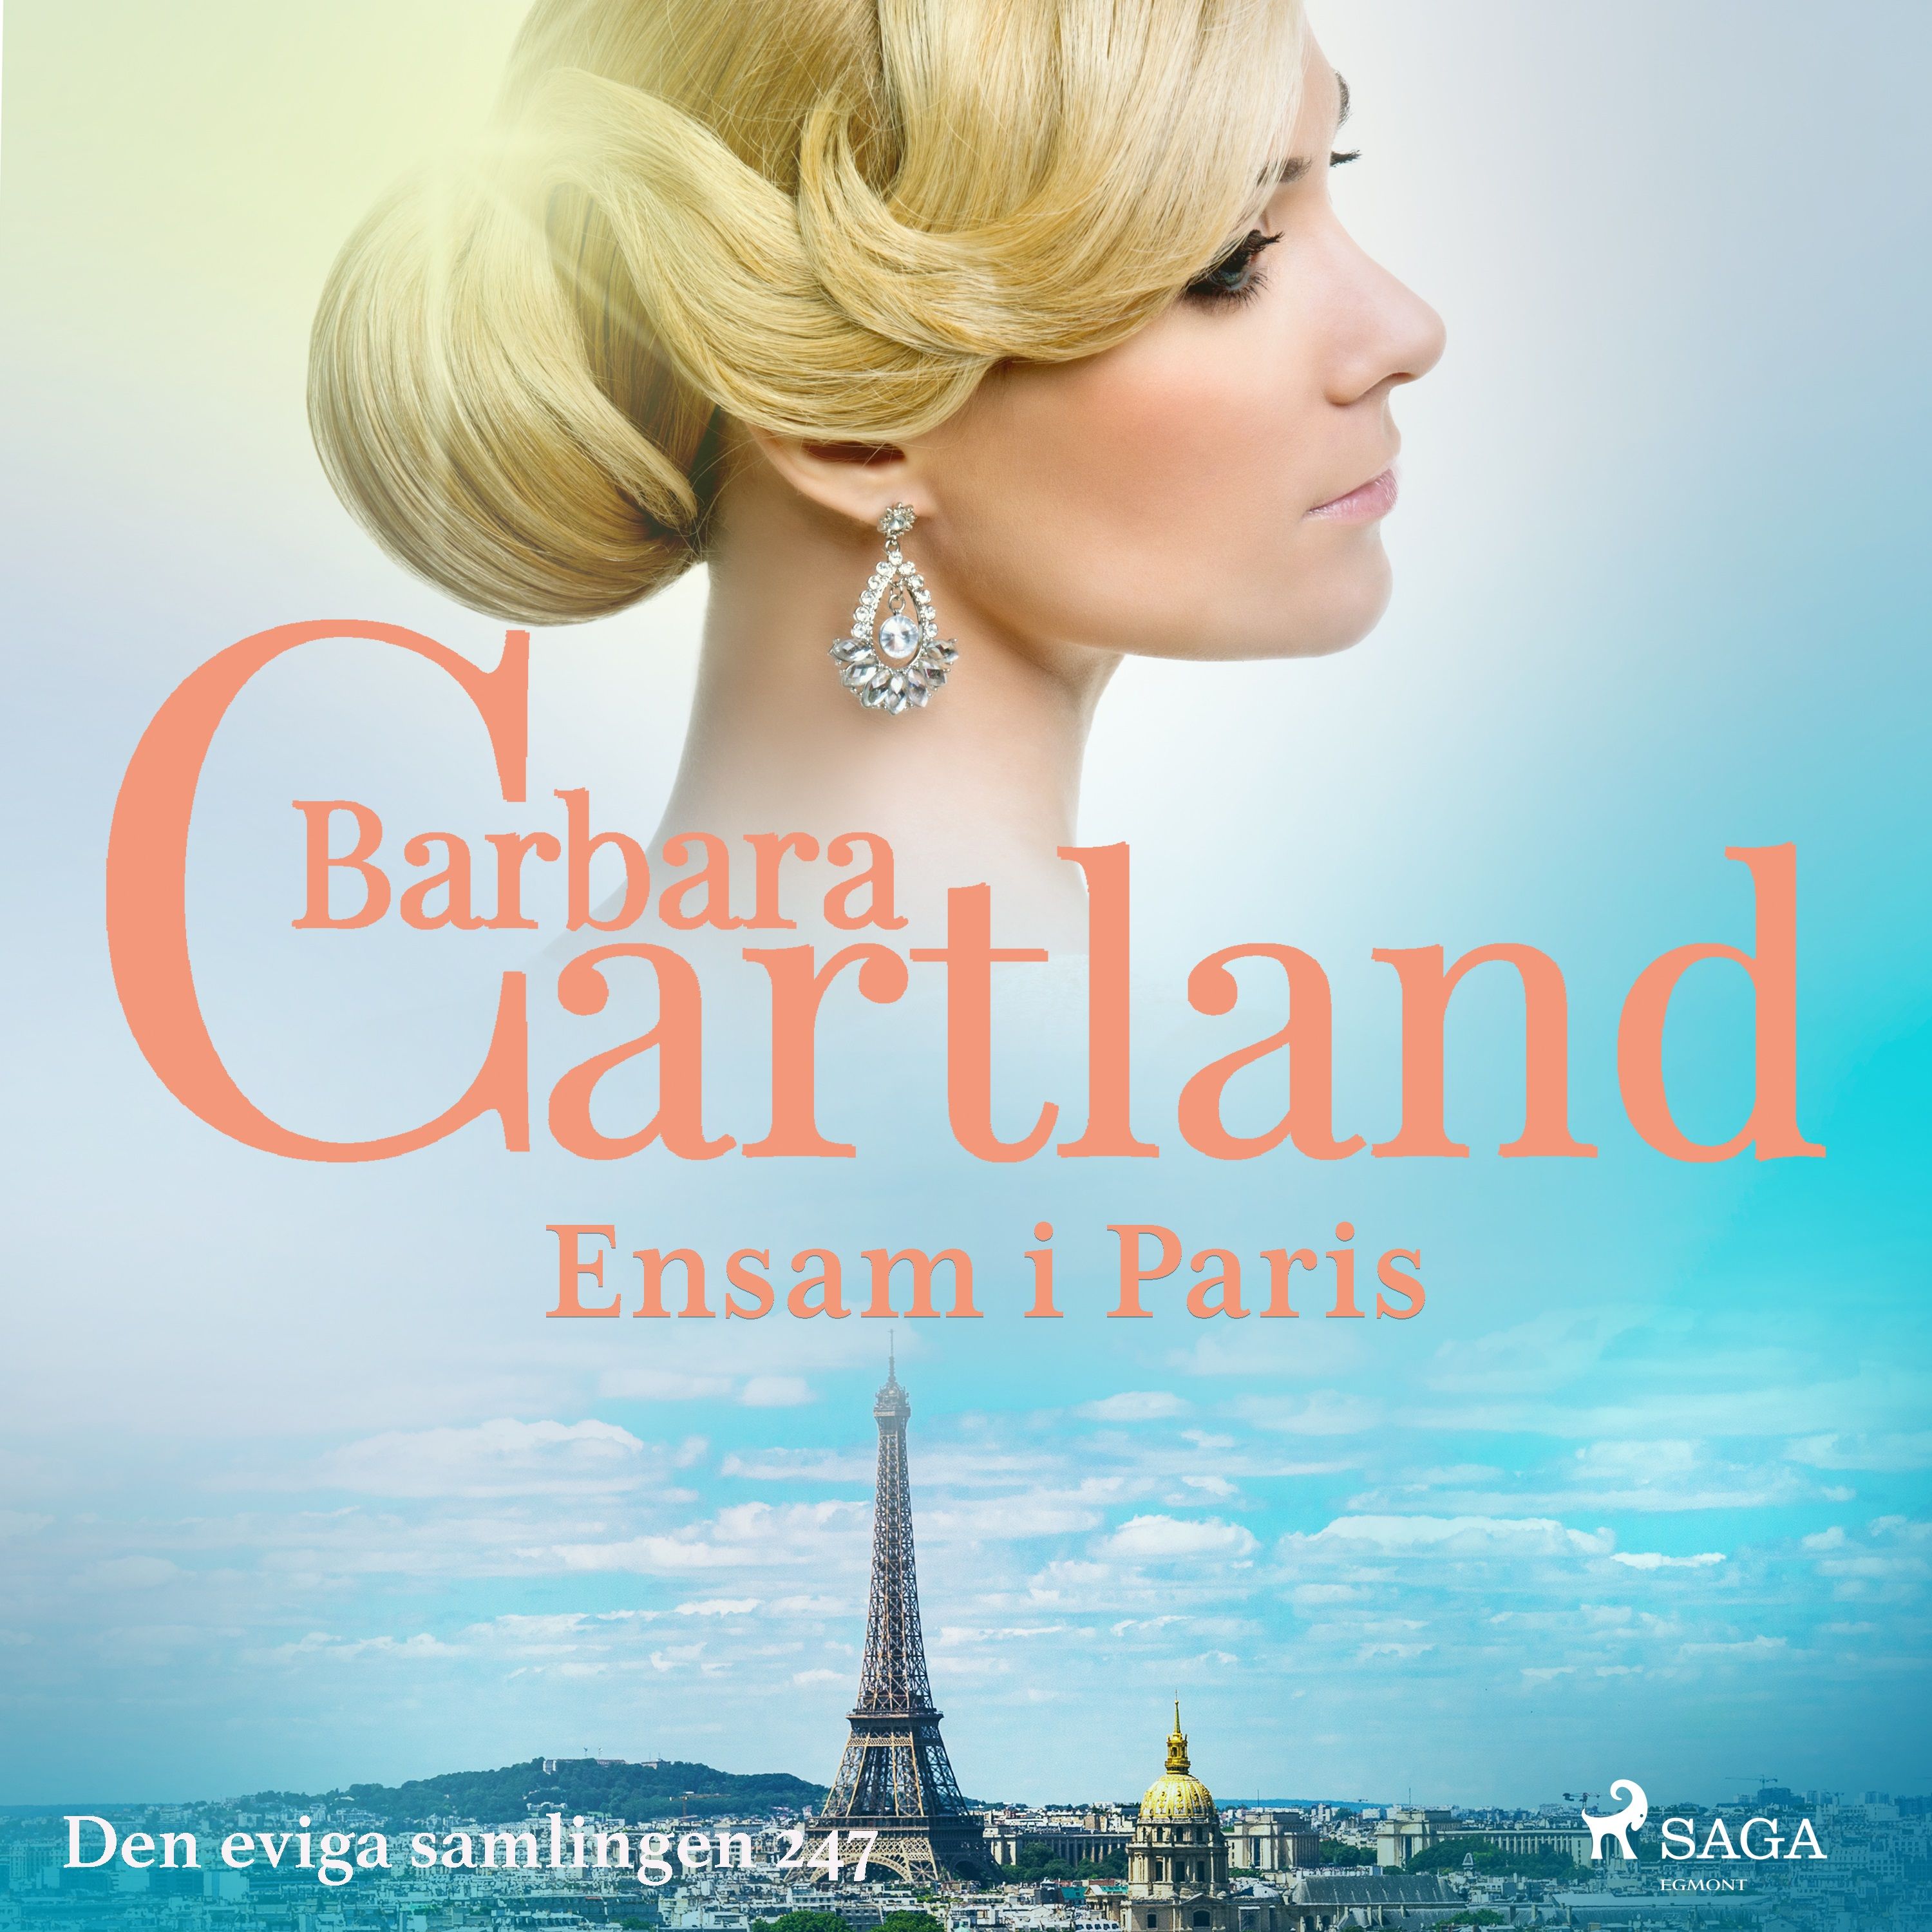 Ensam i Paris, lydbog af Barbara Cartland